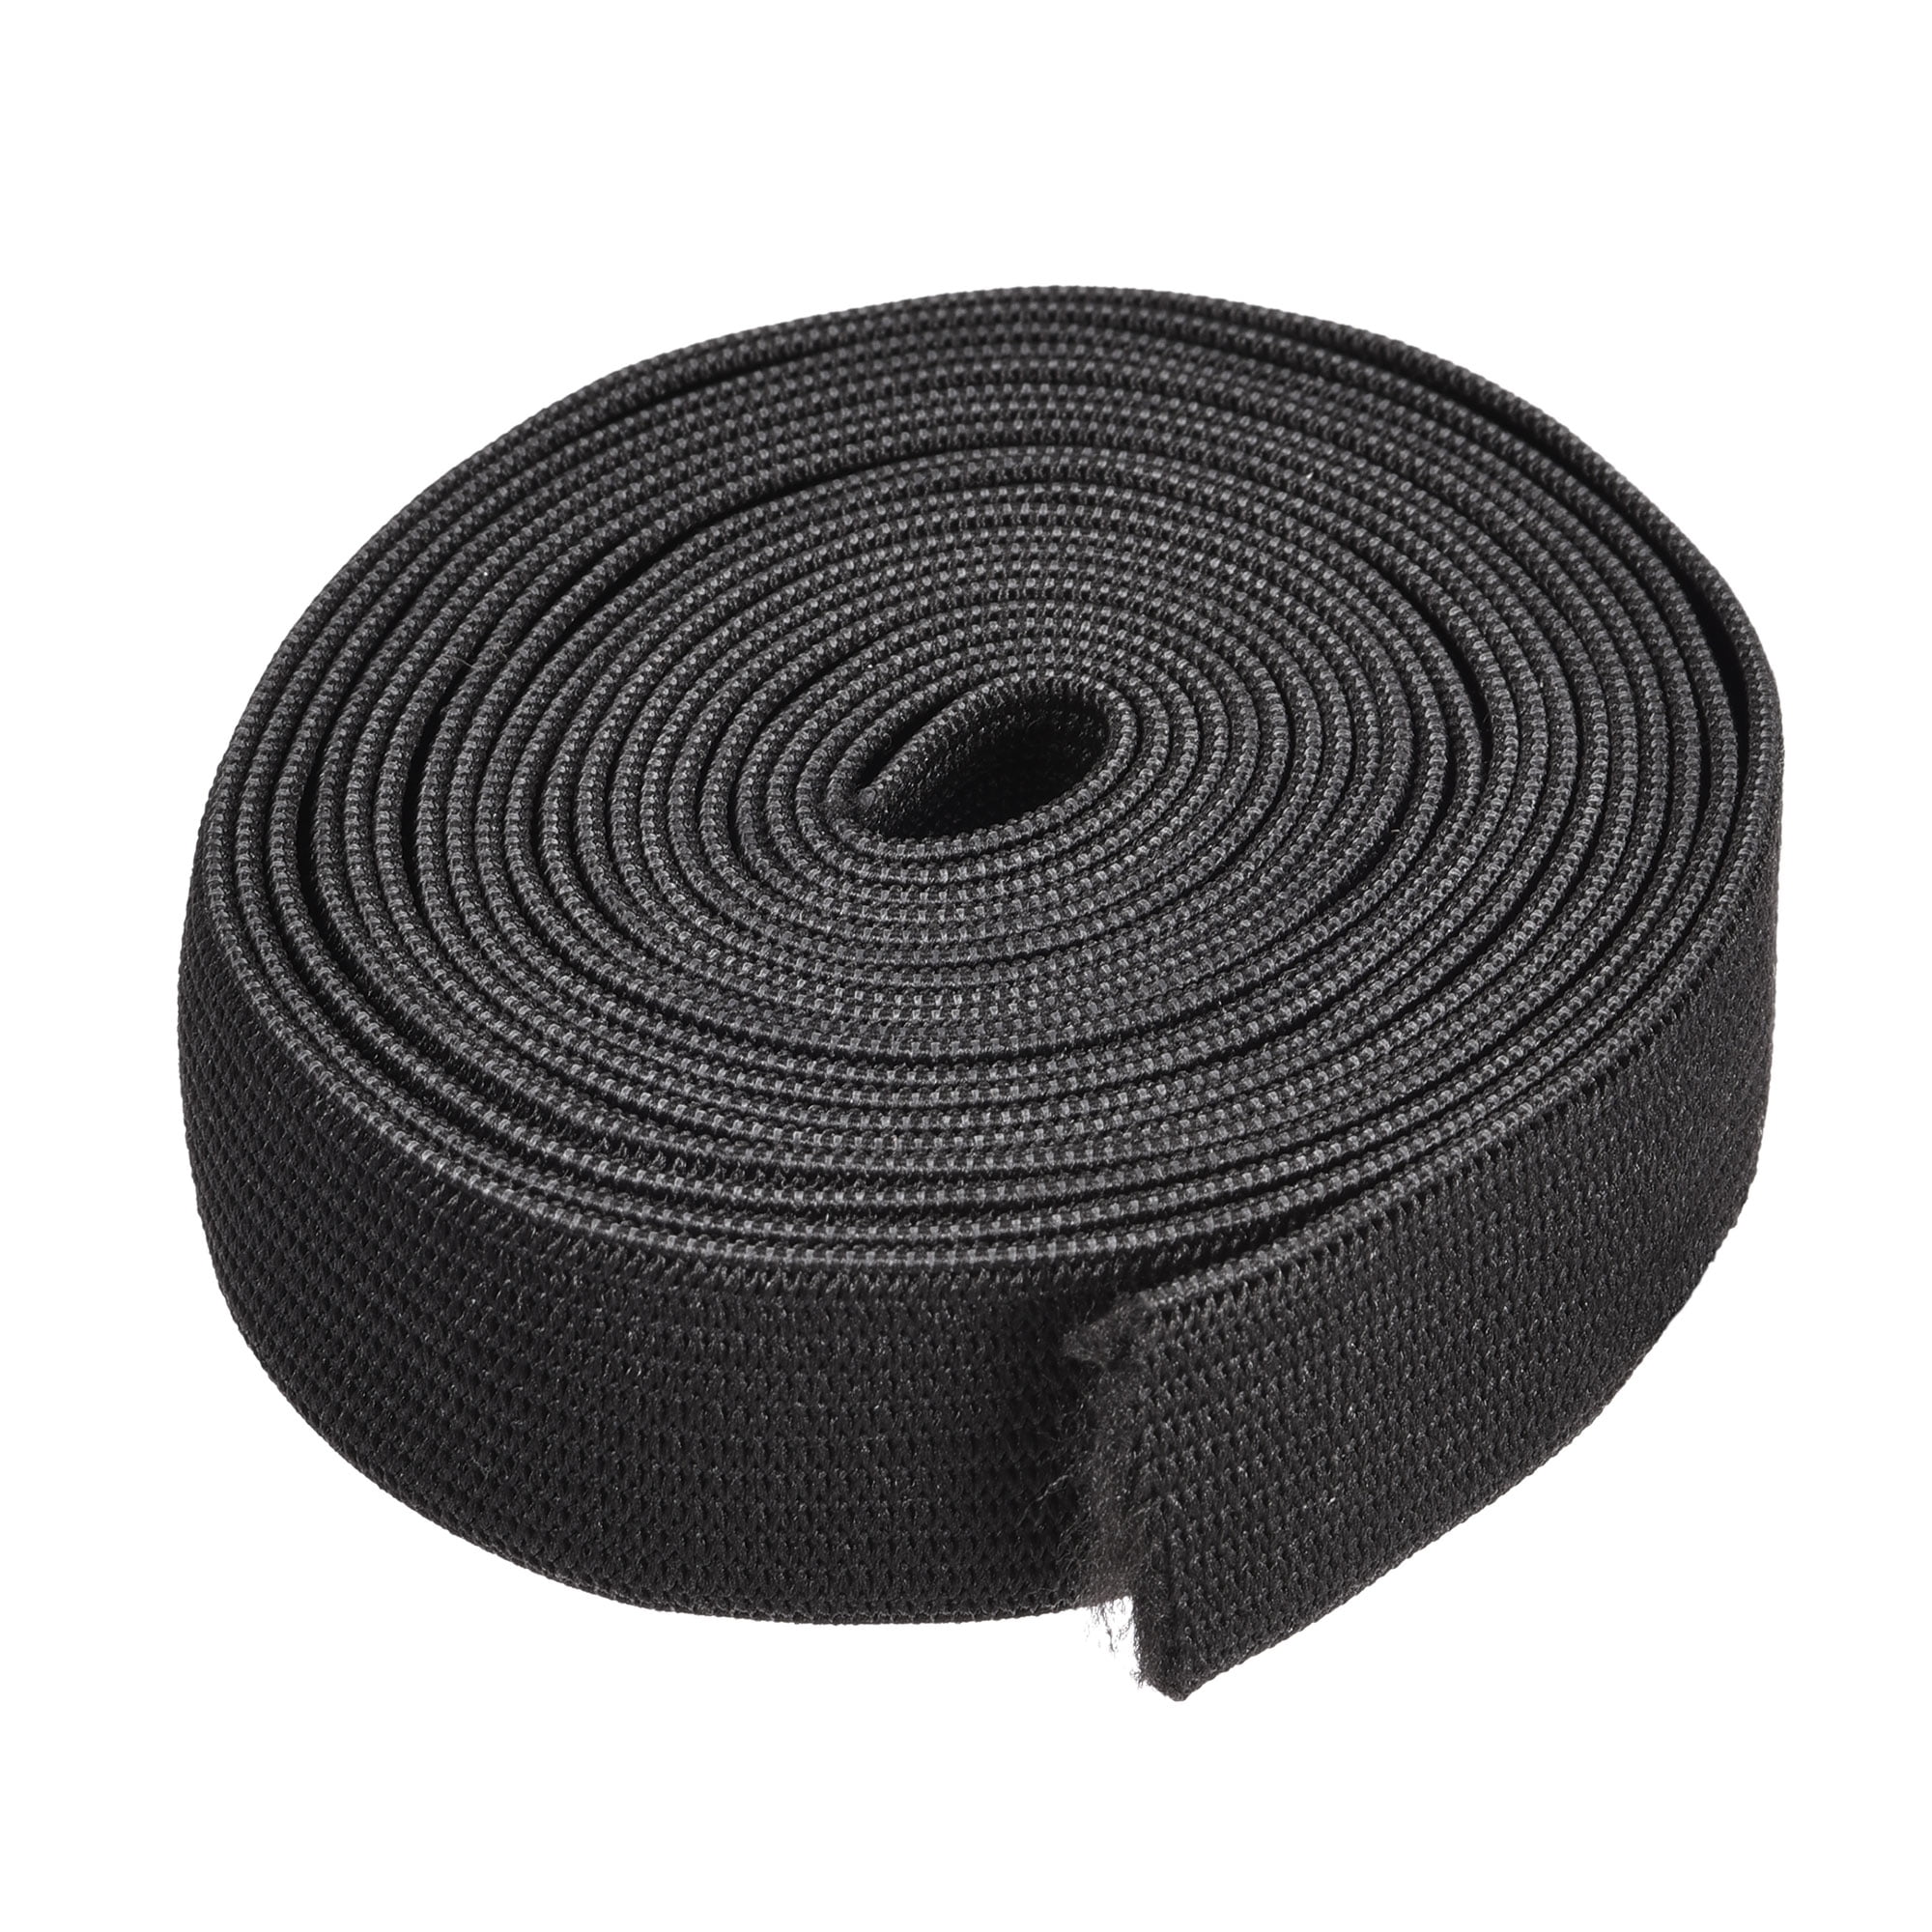 Elastic 10 Meters Flat Sewing Elastic Ribbon Bands Sewing Craft Accessories Black, Size: 2 cm